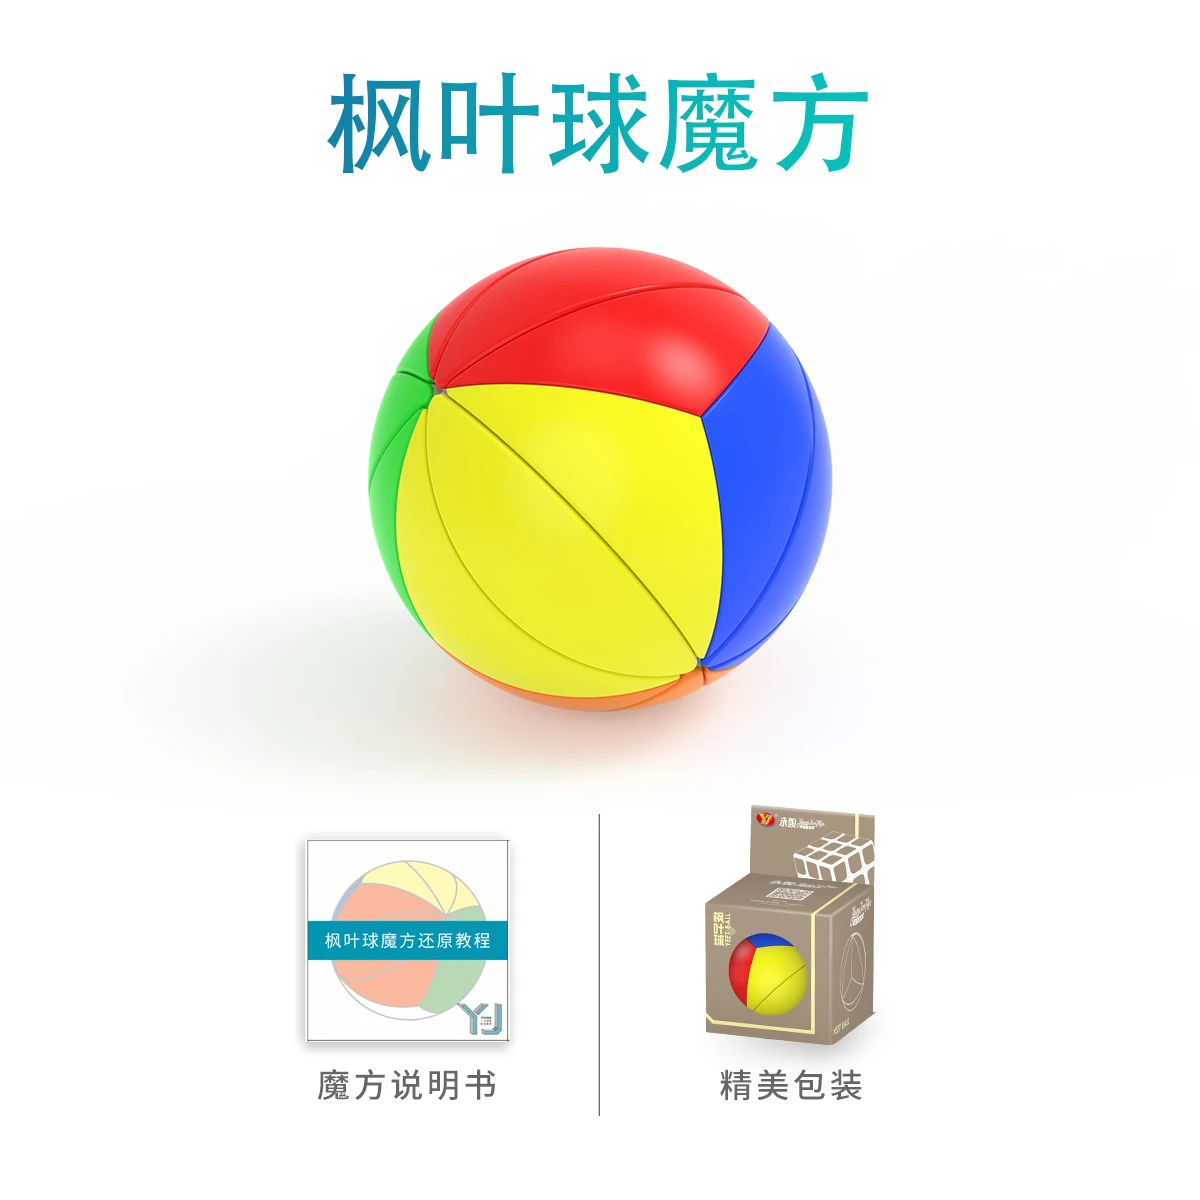 3D Magic Cube Speed Yeet Ball Cube Learning Educational Toy for ChildrenLDUKPTU 